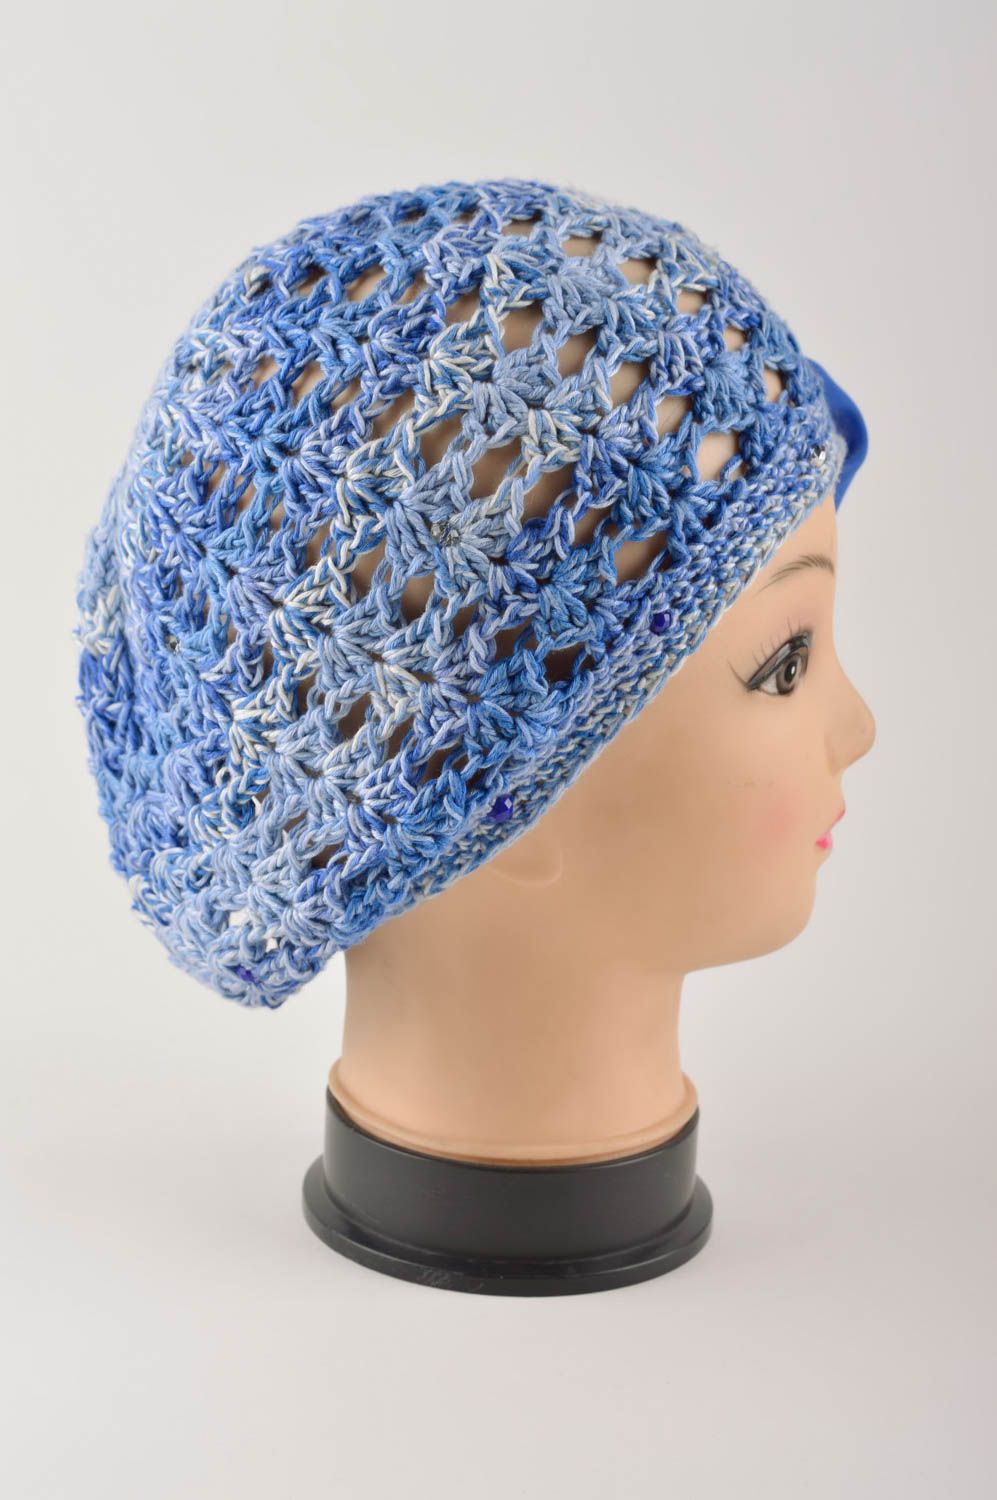 Handmade knitted hat warm hat for girls unusual hat gift ideas handmade cap photo 4